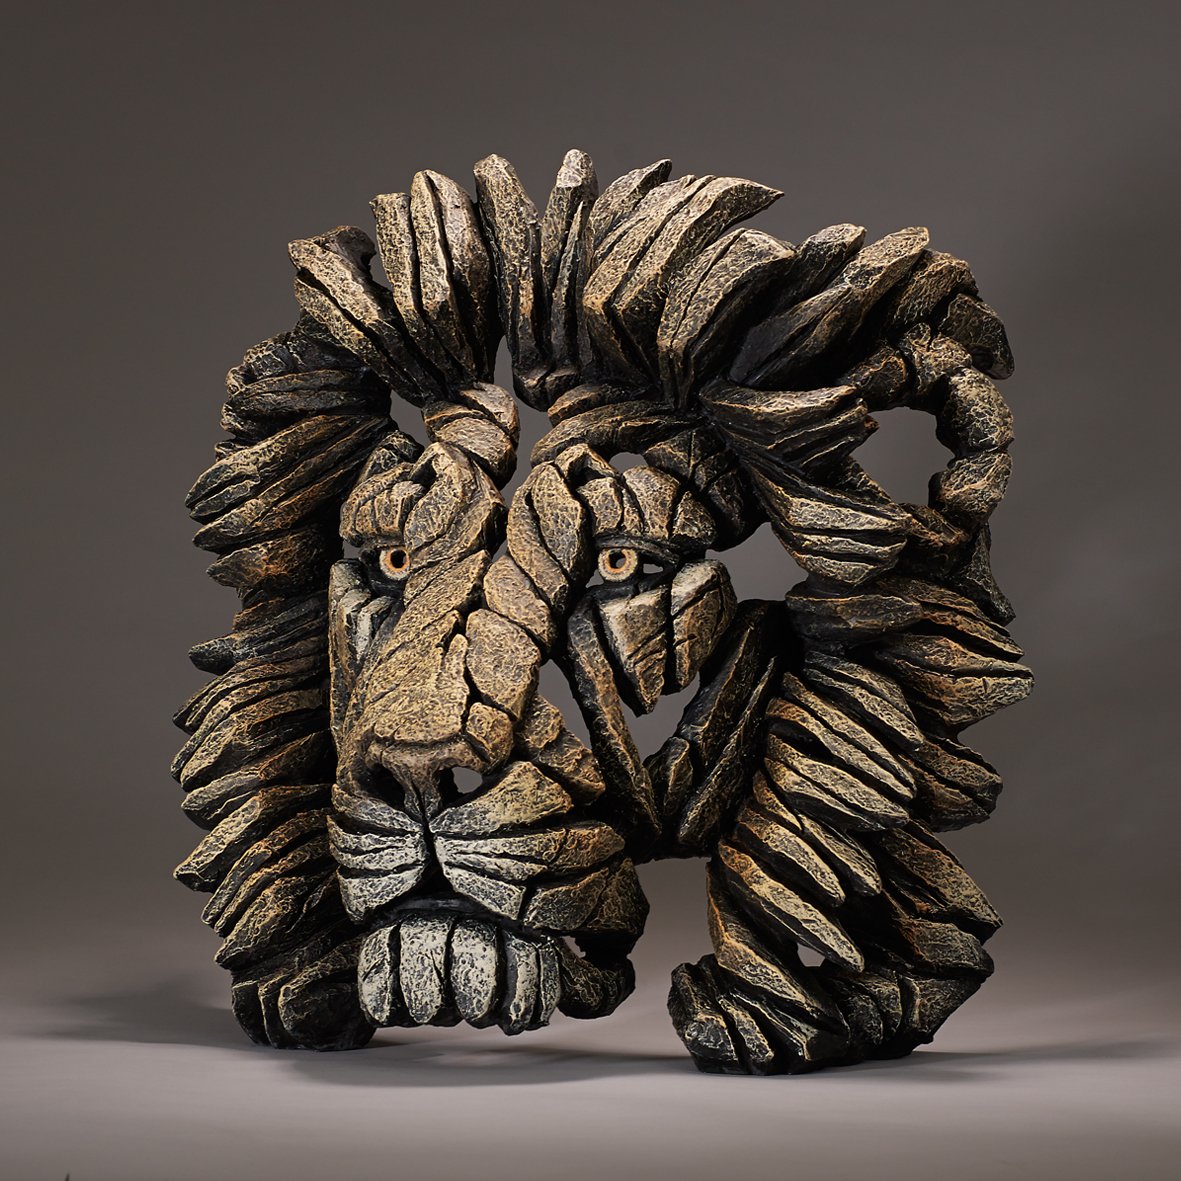 Savannah Lion Bust, Edge Sculpture